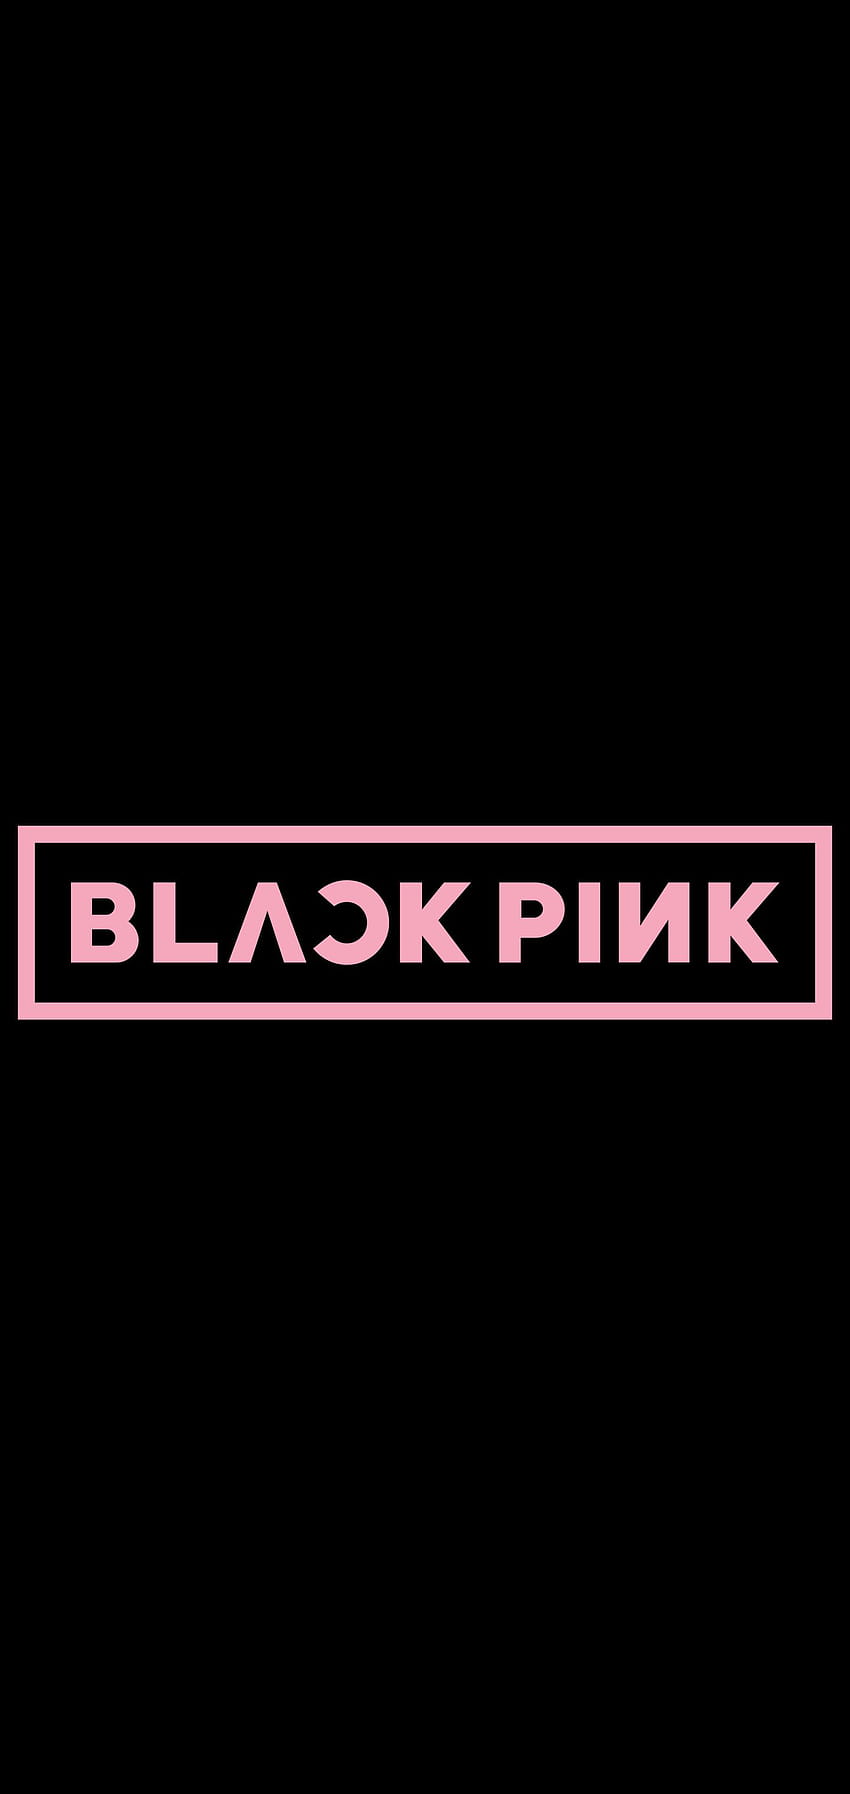 Made some very simple and minimalist Blackpink logo, blackpink minimalist HD phone wallpaper